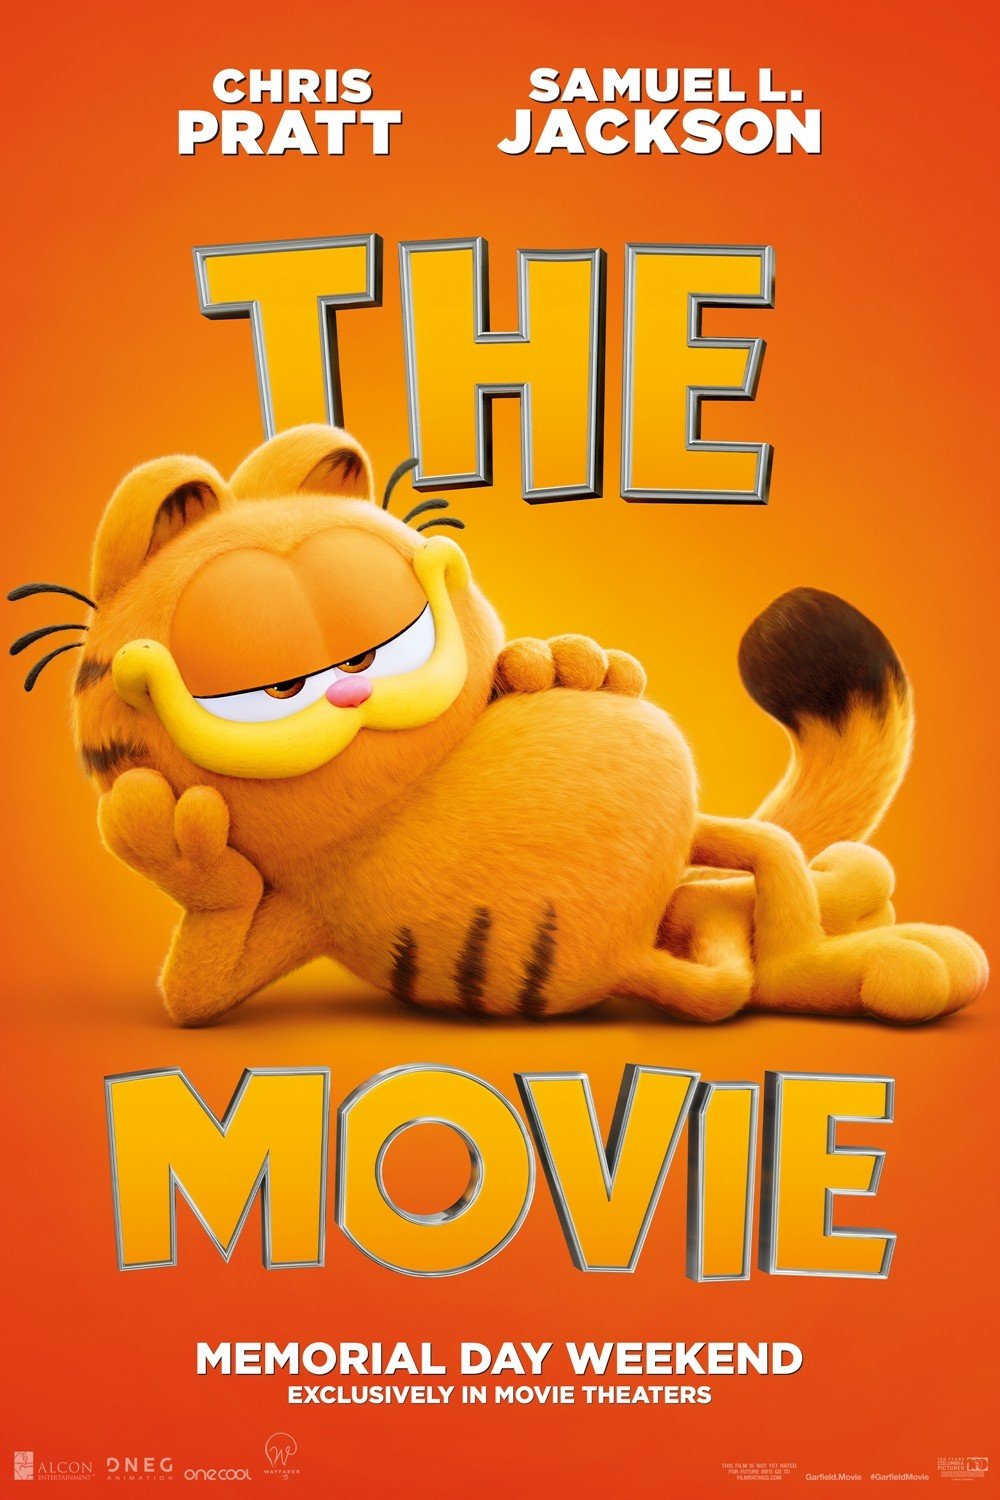 5/24 The Garfield Movie